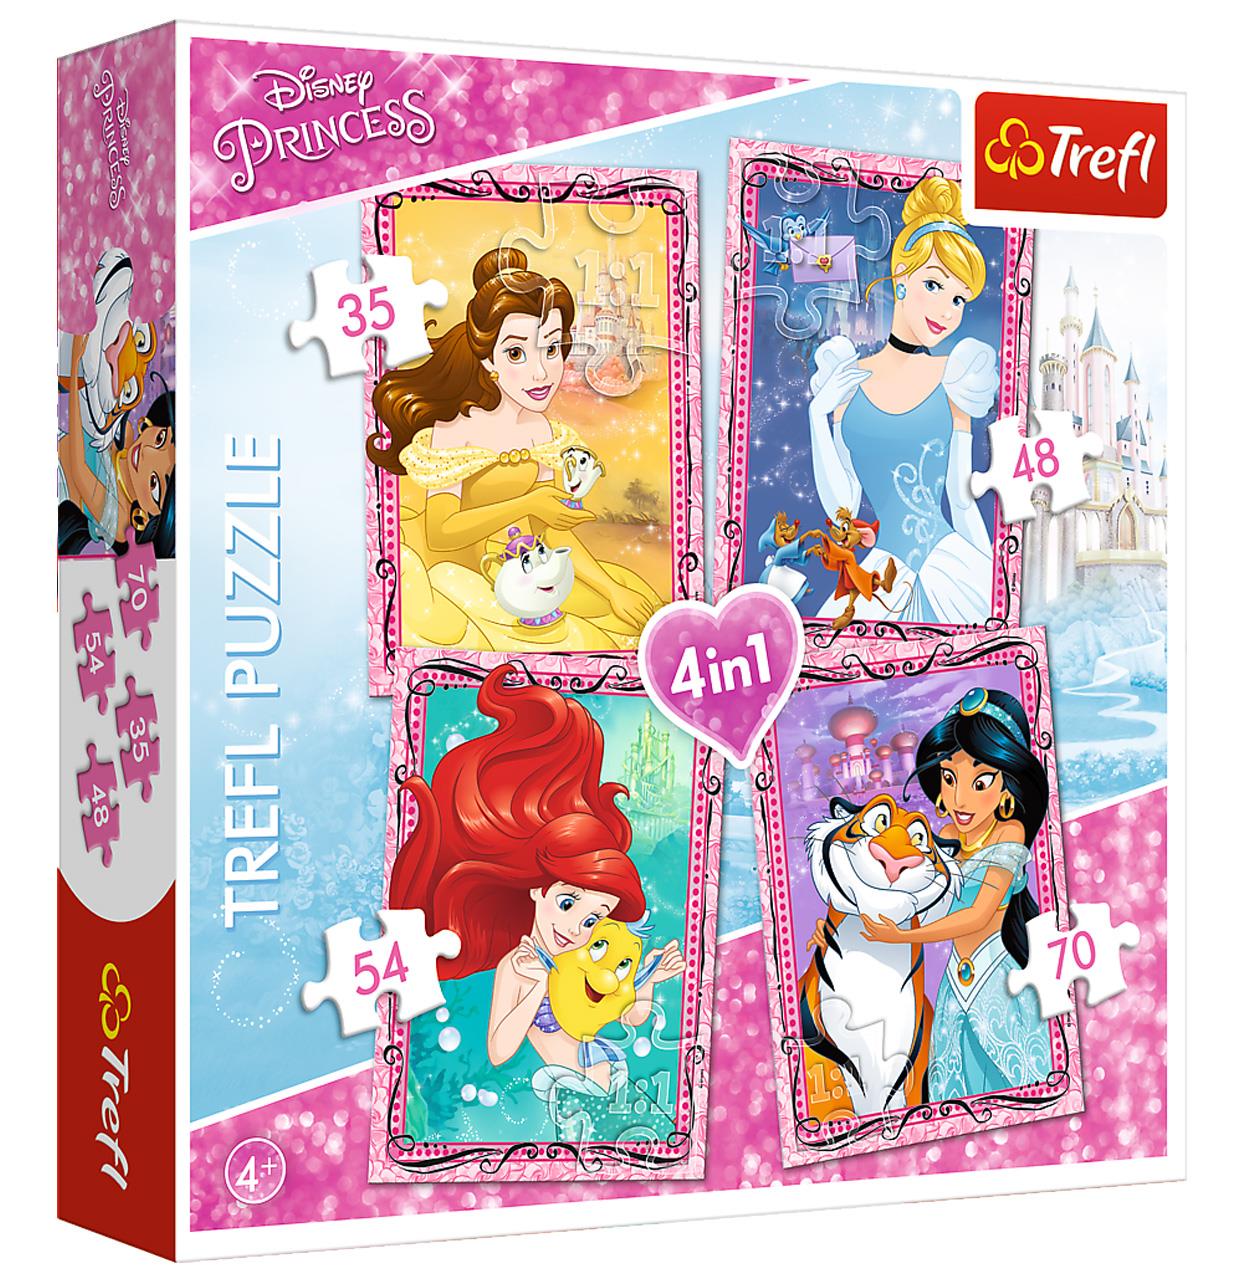 Trefl Çocuk Puzzle 34256 Princess With Friends, Disney 35+48+54+70 Parça 4 in 1 Puzzle